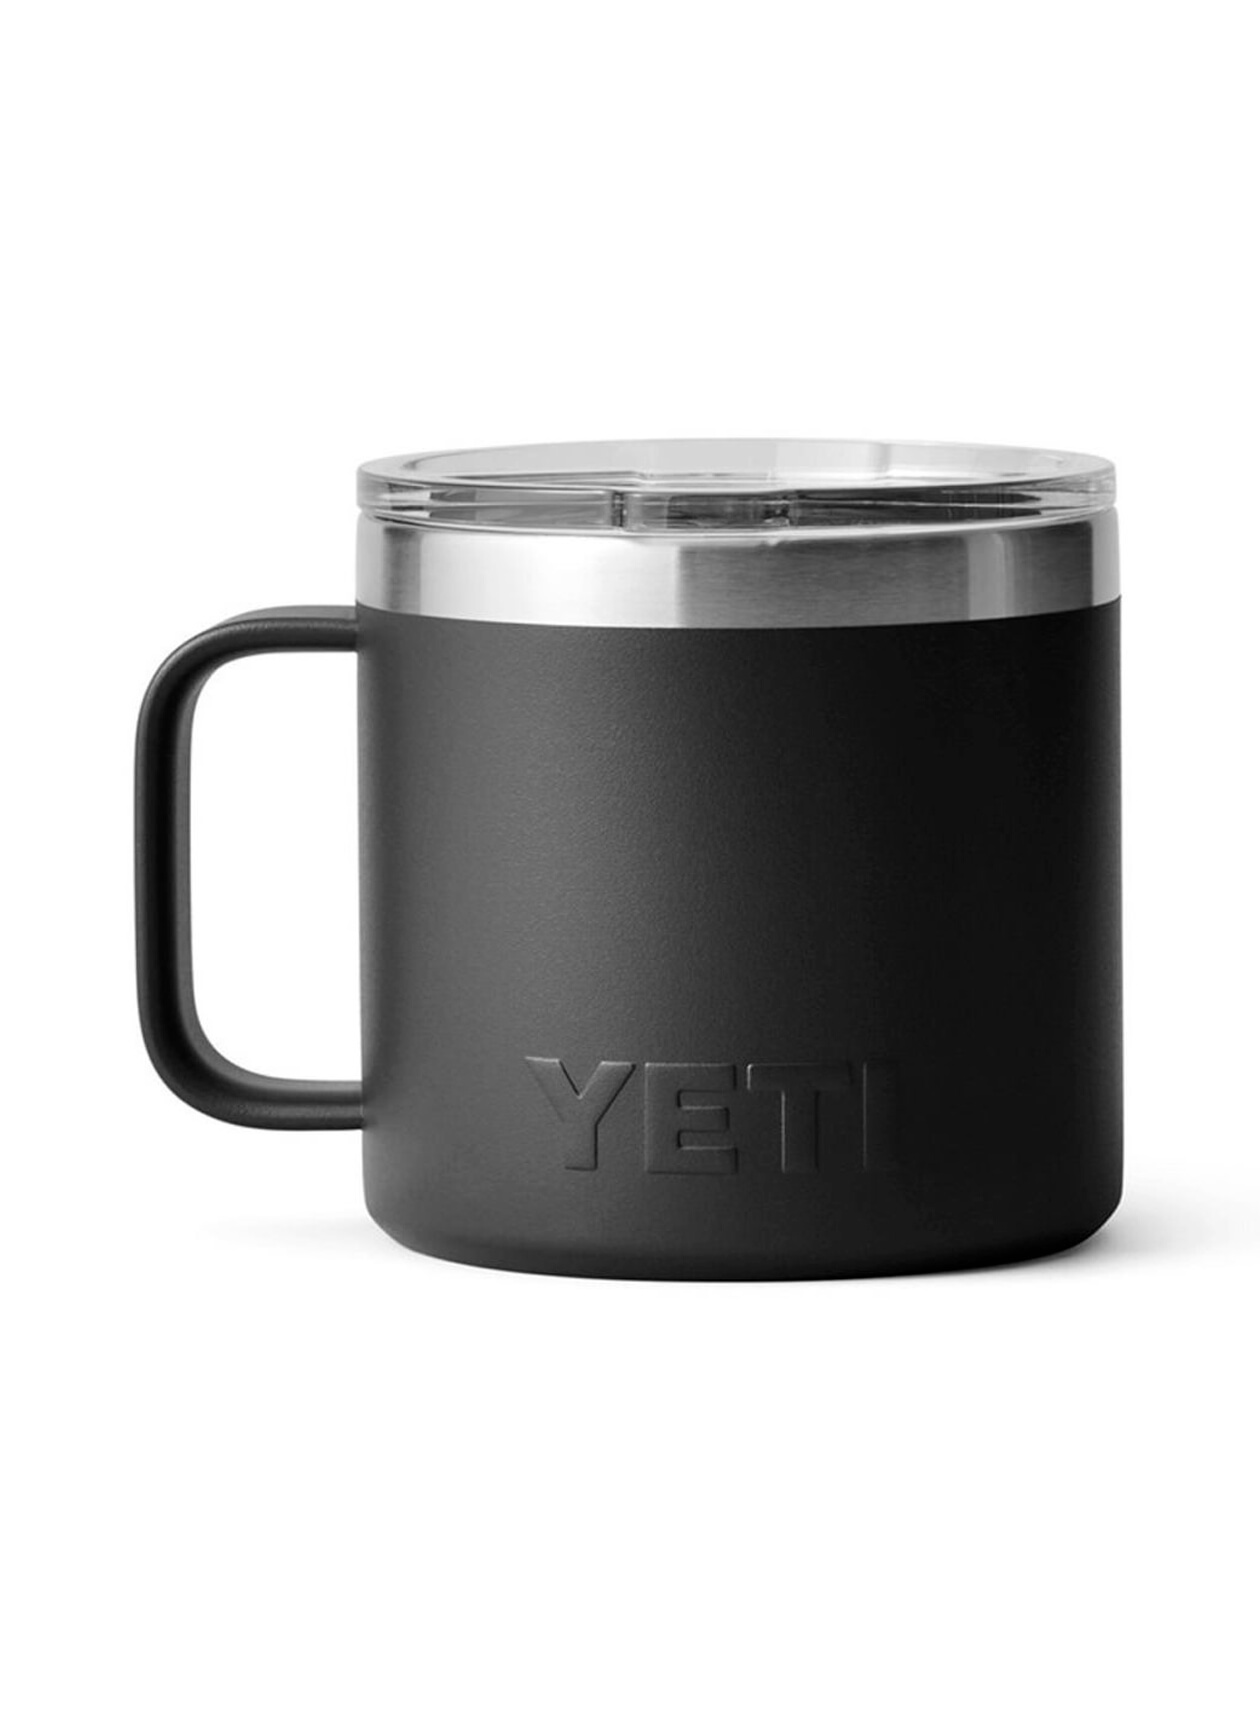 YETI Rambler 14 Oz Mug With Magslider Lid YRAM14MS Black